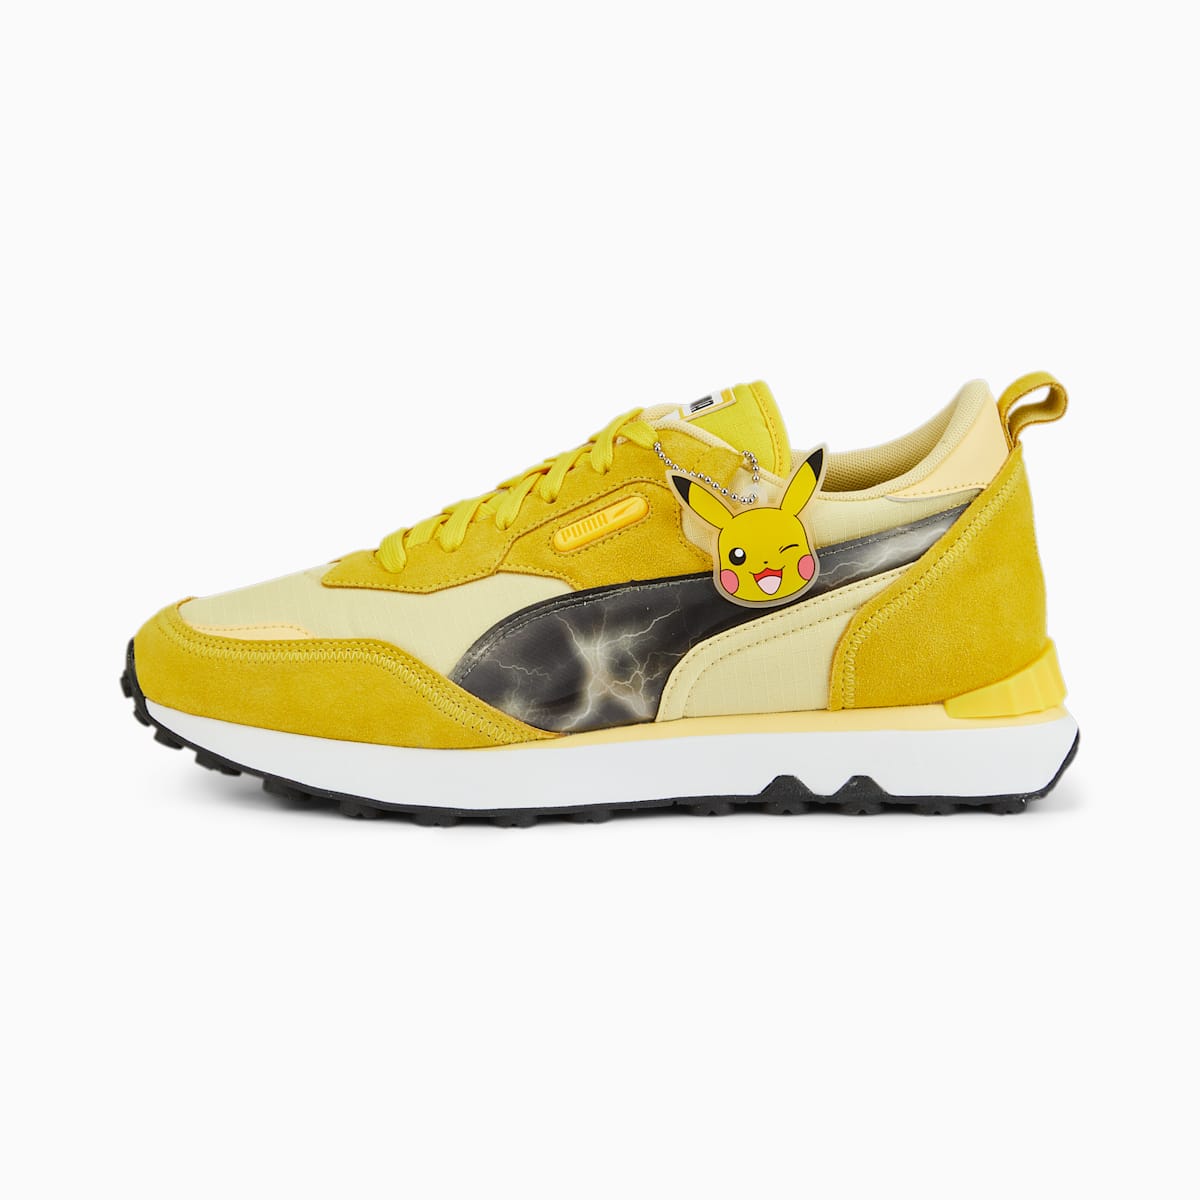 PUMA x POKÉMON Rider FV Pikachu Sneakers